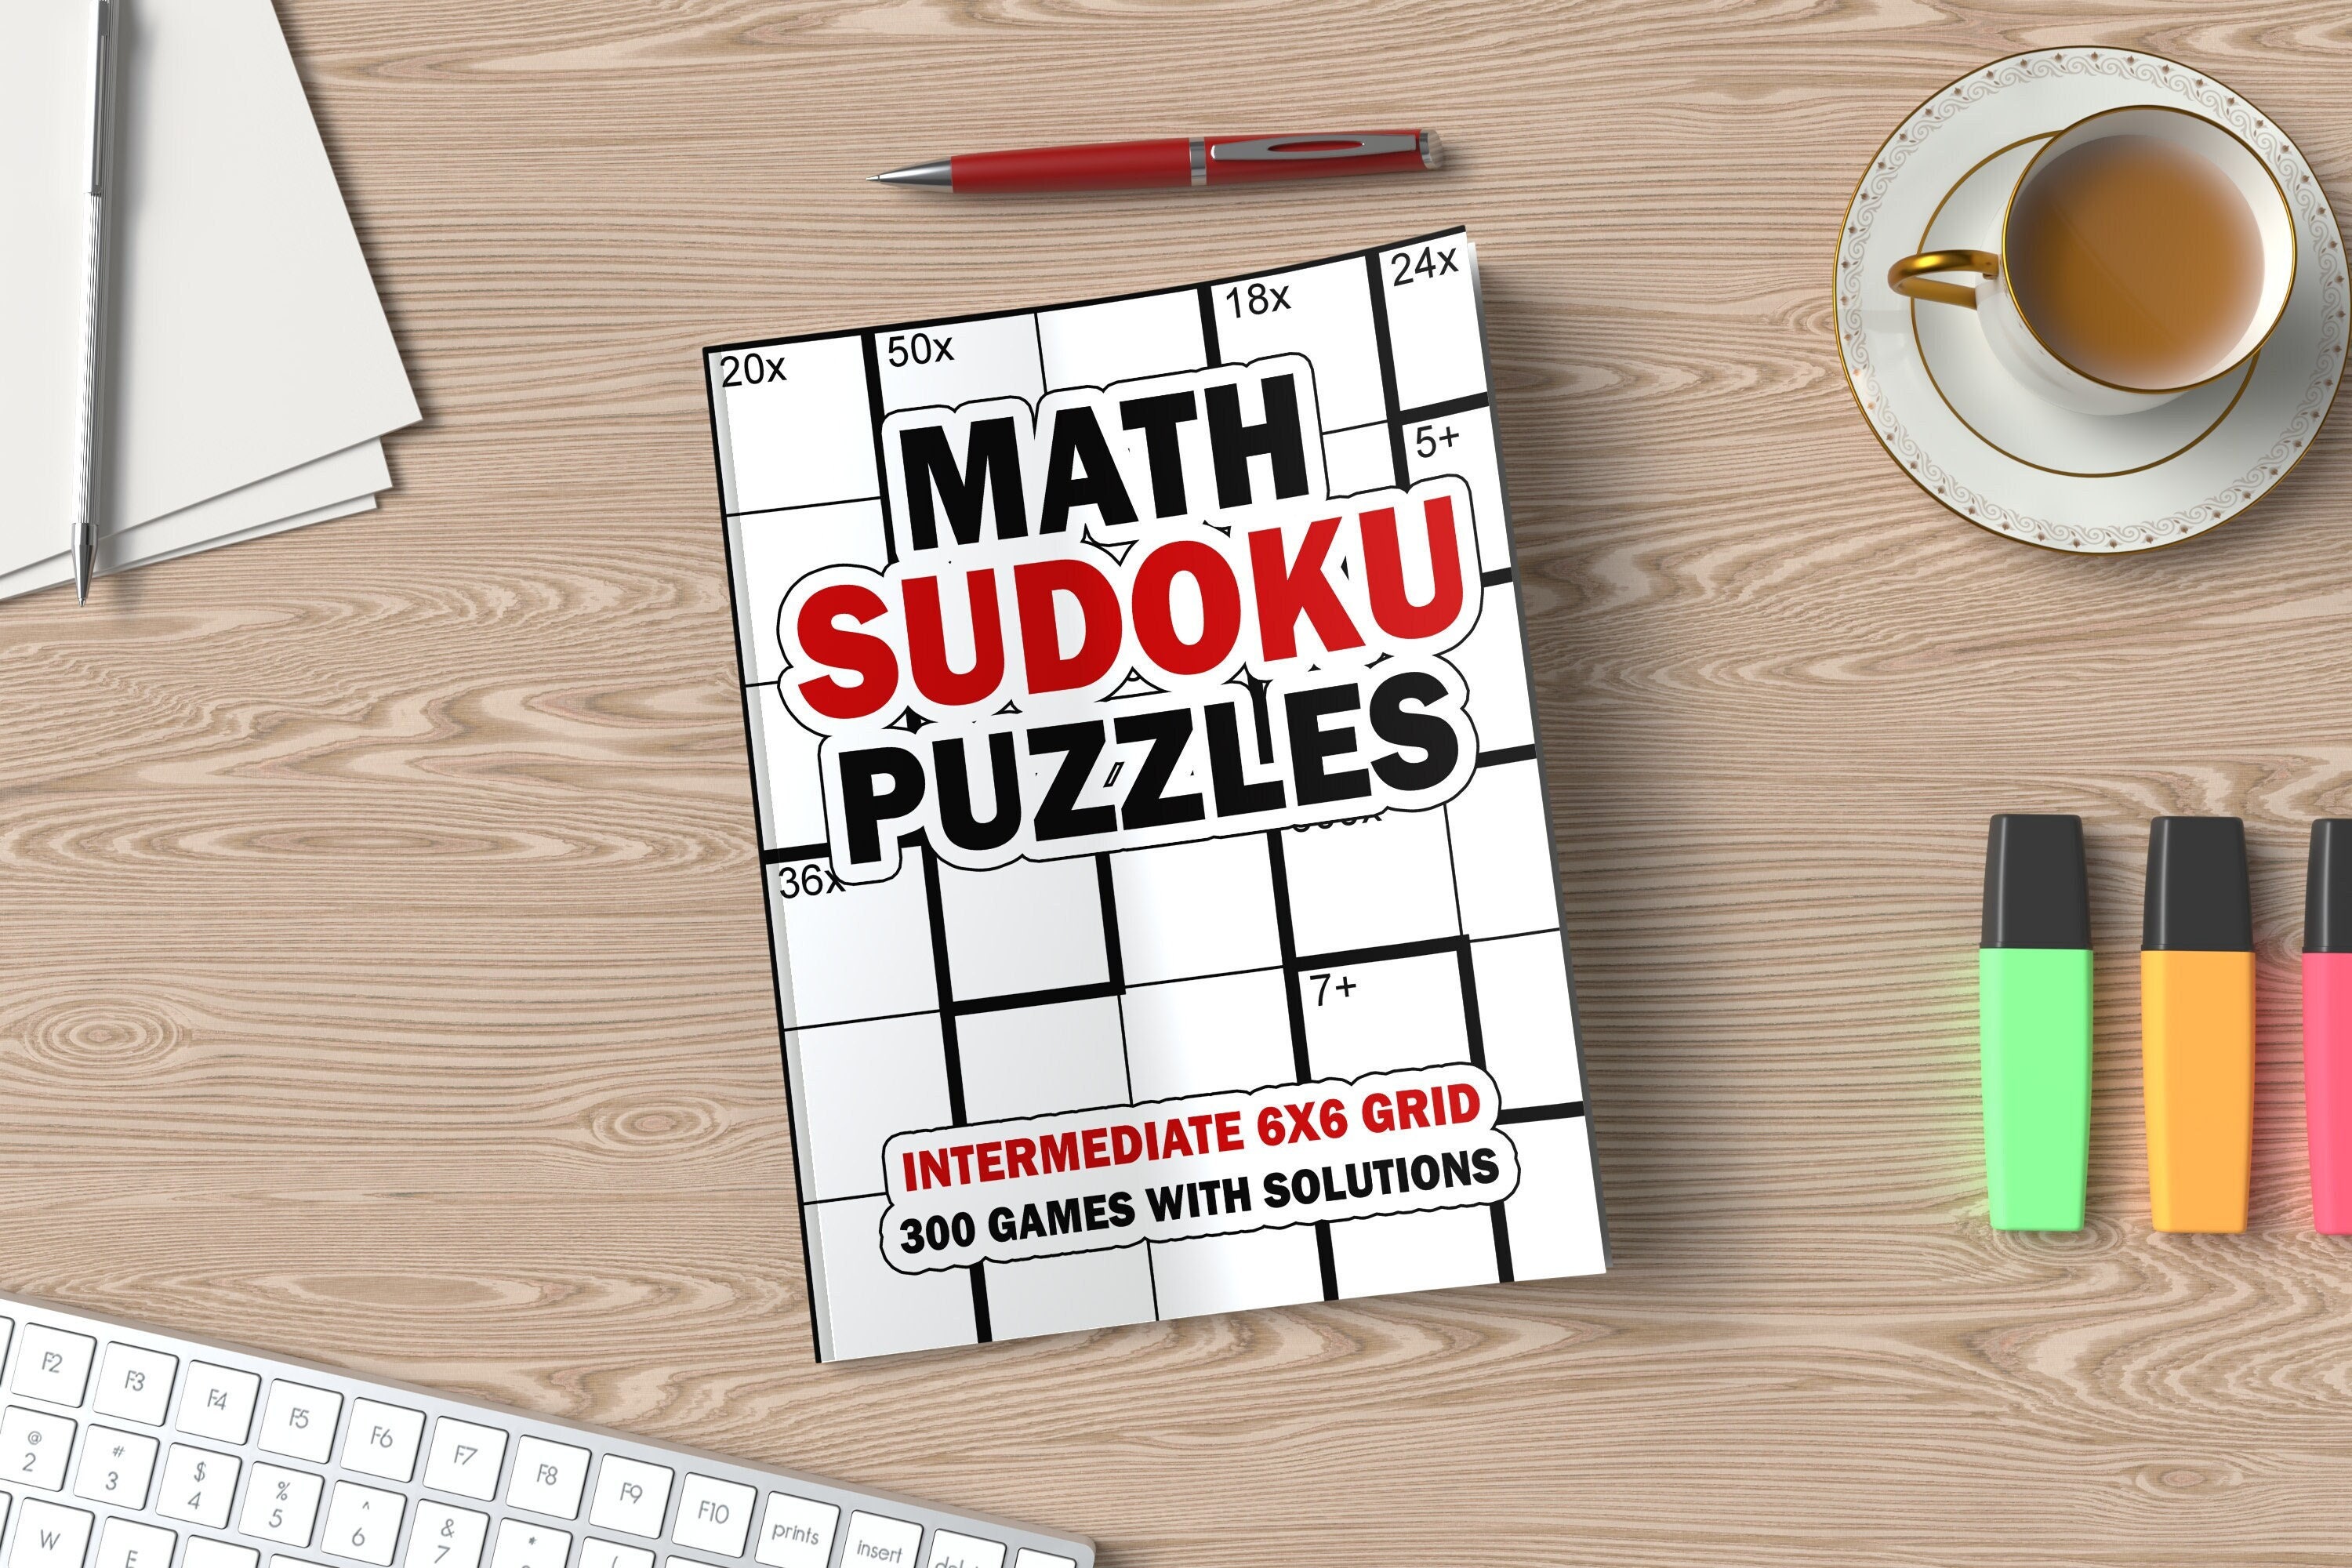 Sudoku medium difficulty help - Puzzling Stack Exchange